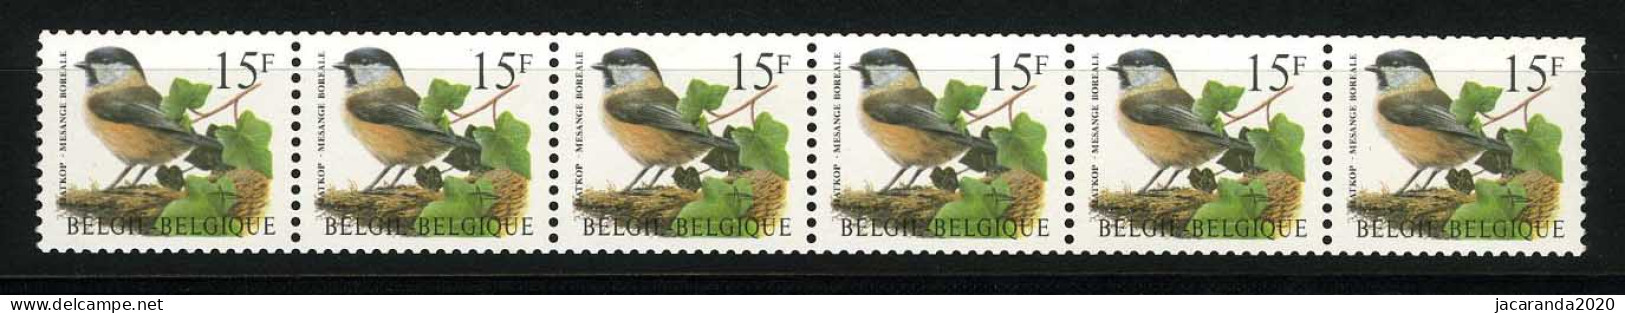 België R81a - Vogels - Oiseaux - Buzin (2732) - Strook Van 6 ZONDER NUMMER - SANS NUMERO - ZELDZAAM - RARE - Francobolli In Bobina